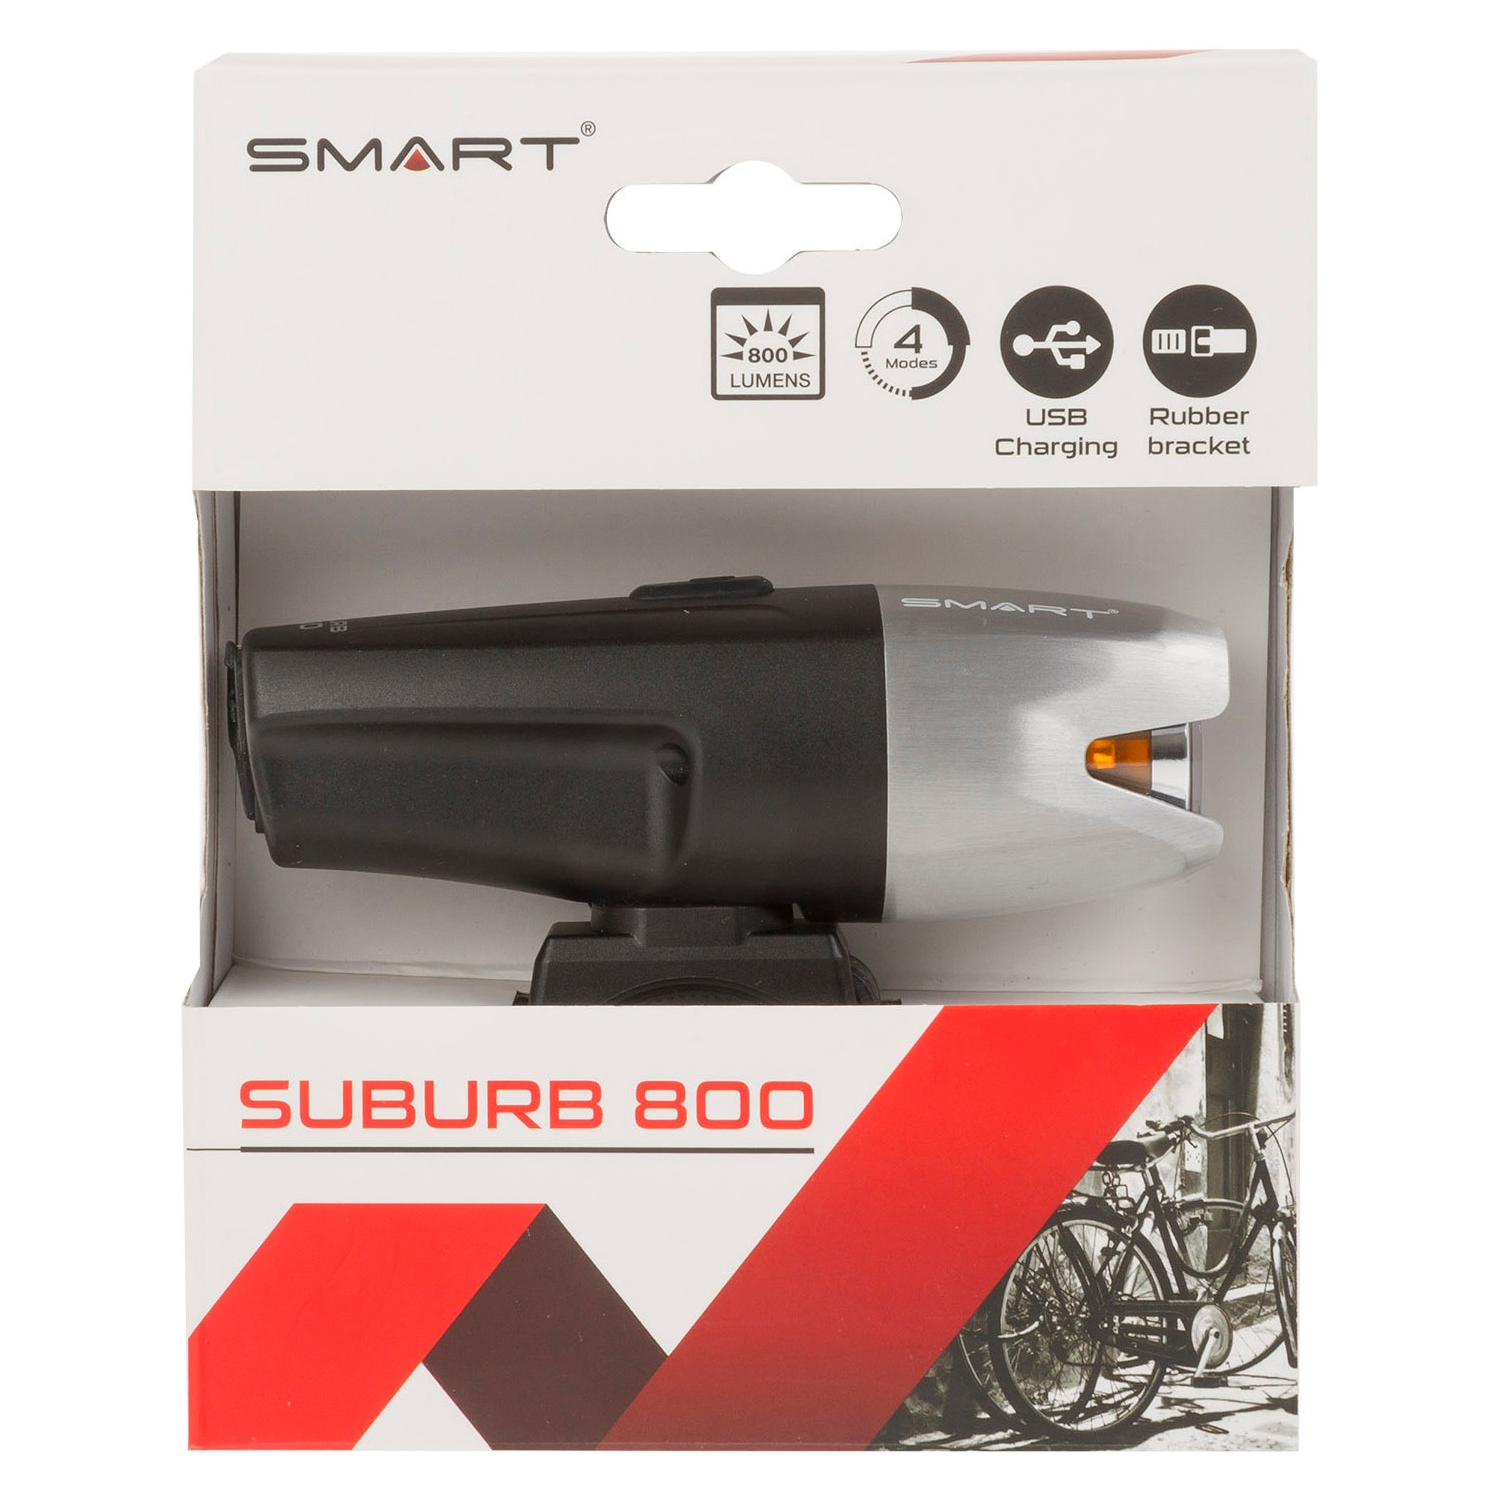 SMART-Lampe SUBURB 800 Lumen USB in schwarz/silber